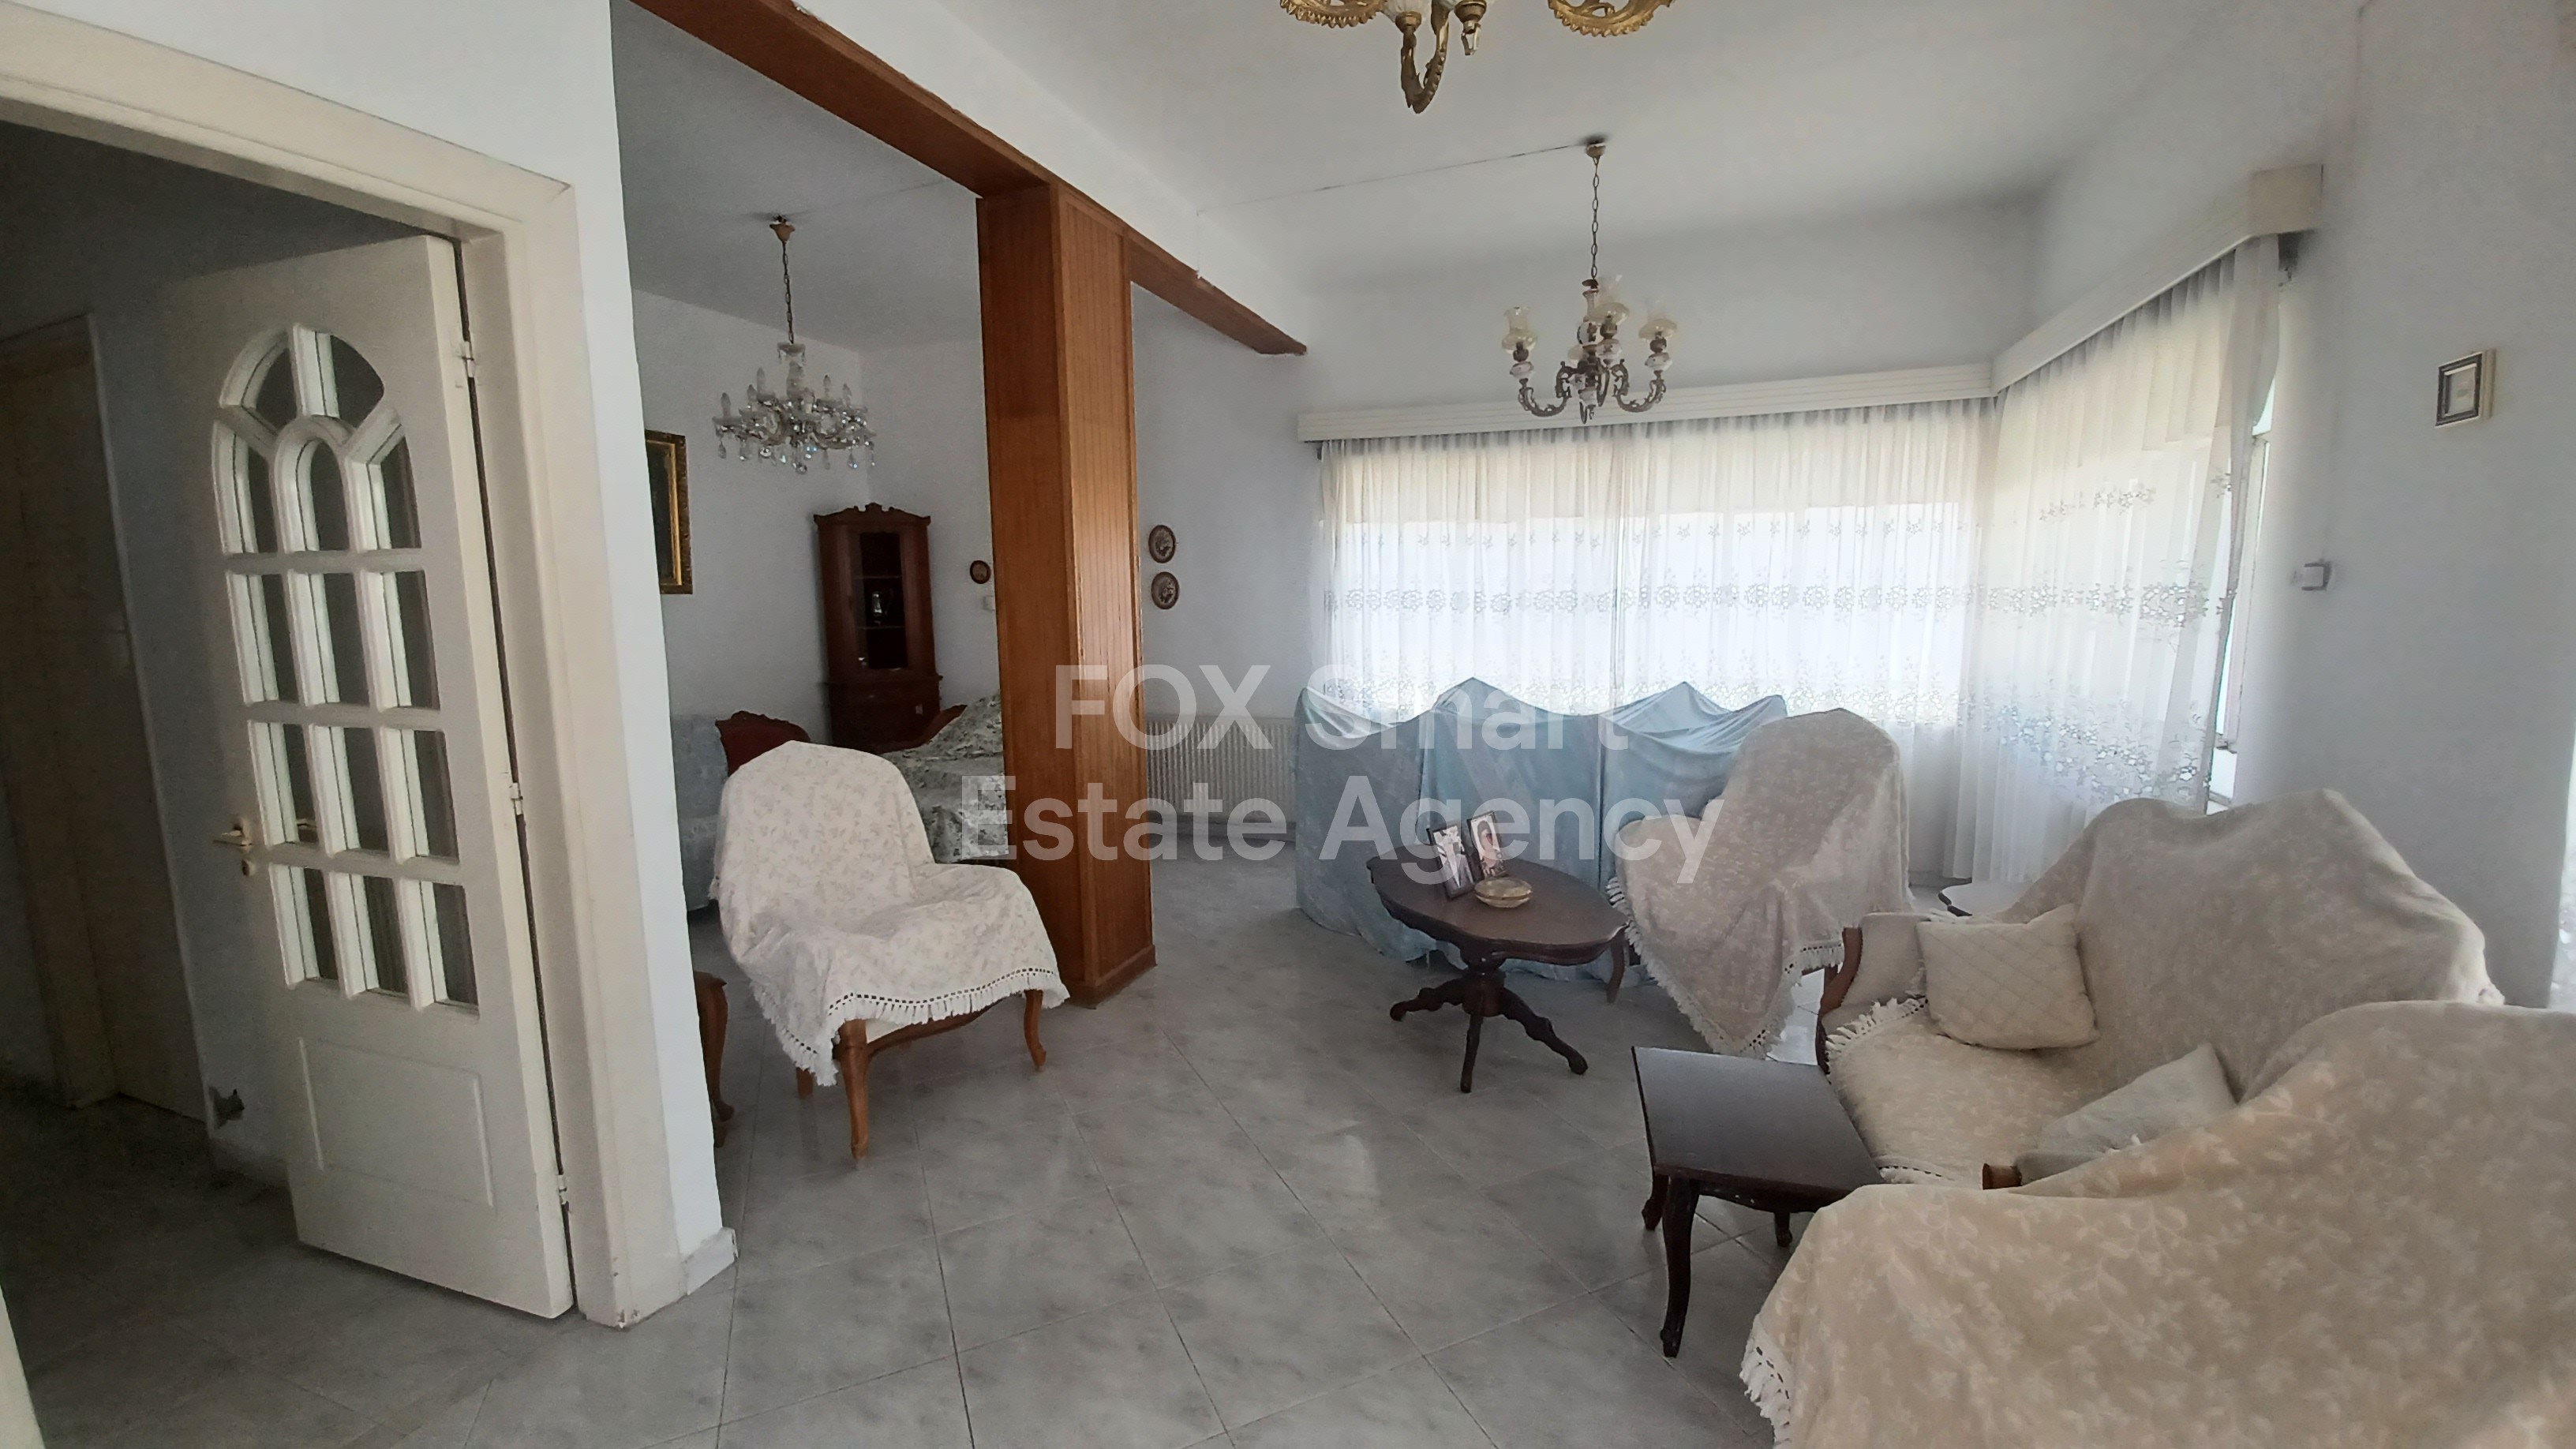 House, For Sale, Larnaca, Chrysopolitissa  2 Bedrooms 1 Bath.....